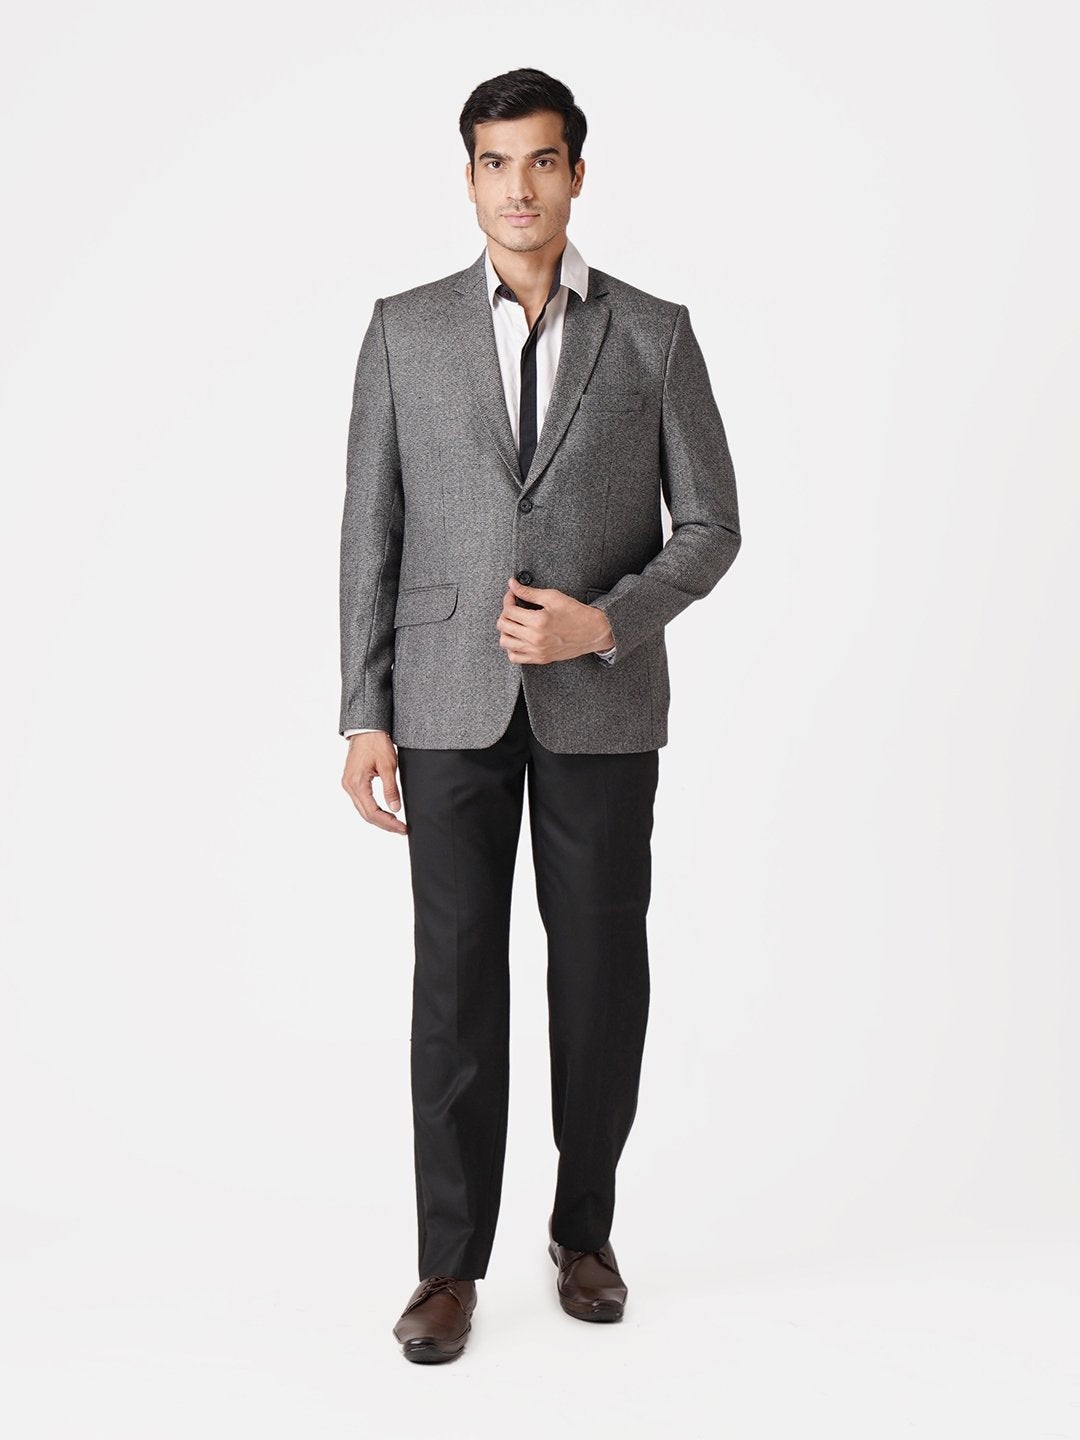 WINTAGE Men's Tweed Casual and Festive Blazer Coat Jacket: Grey